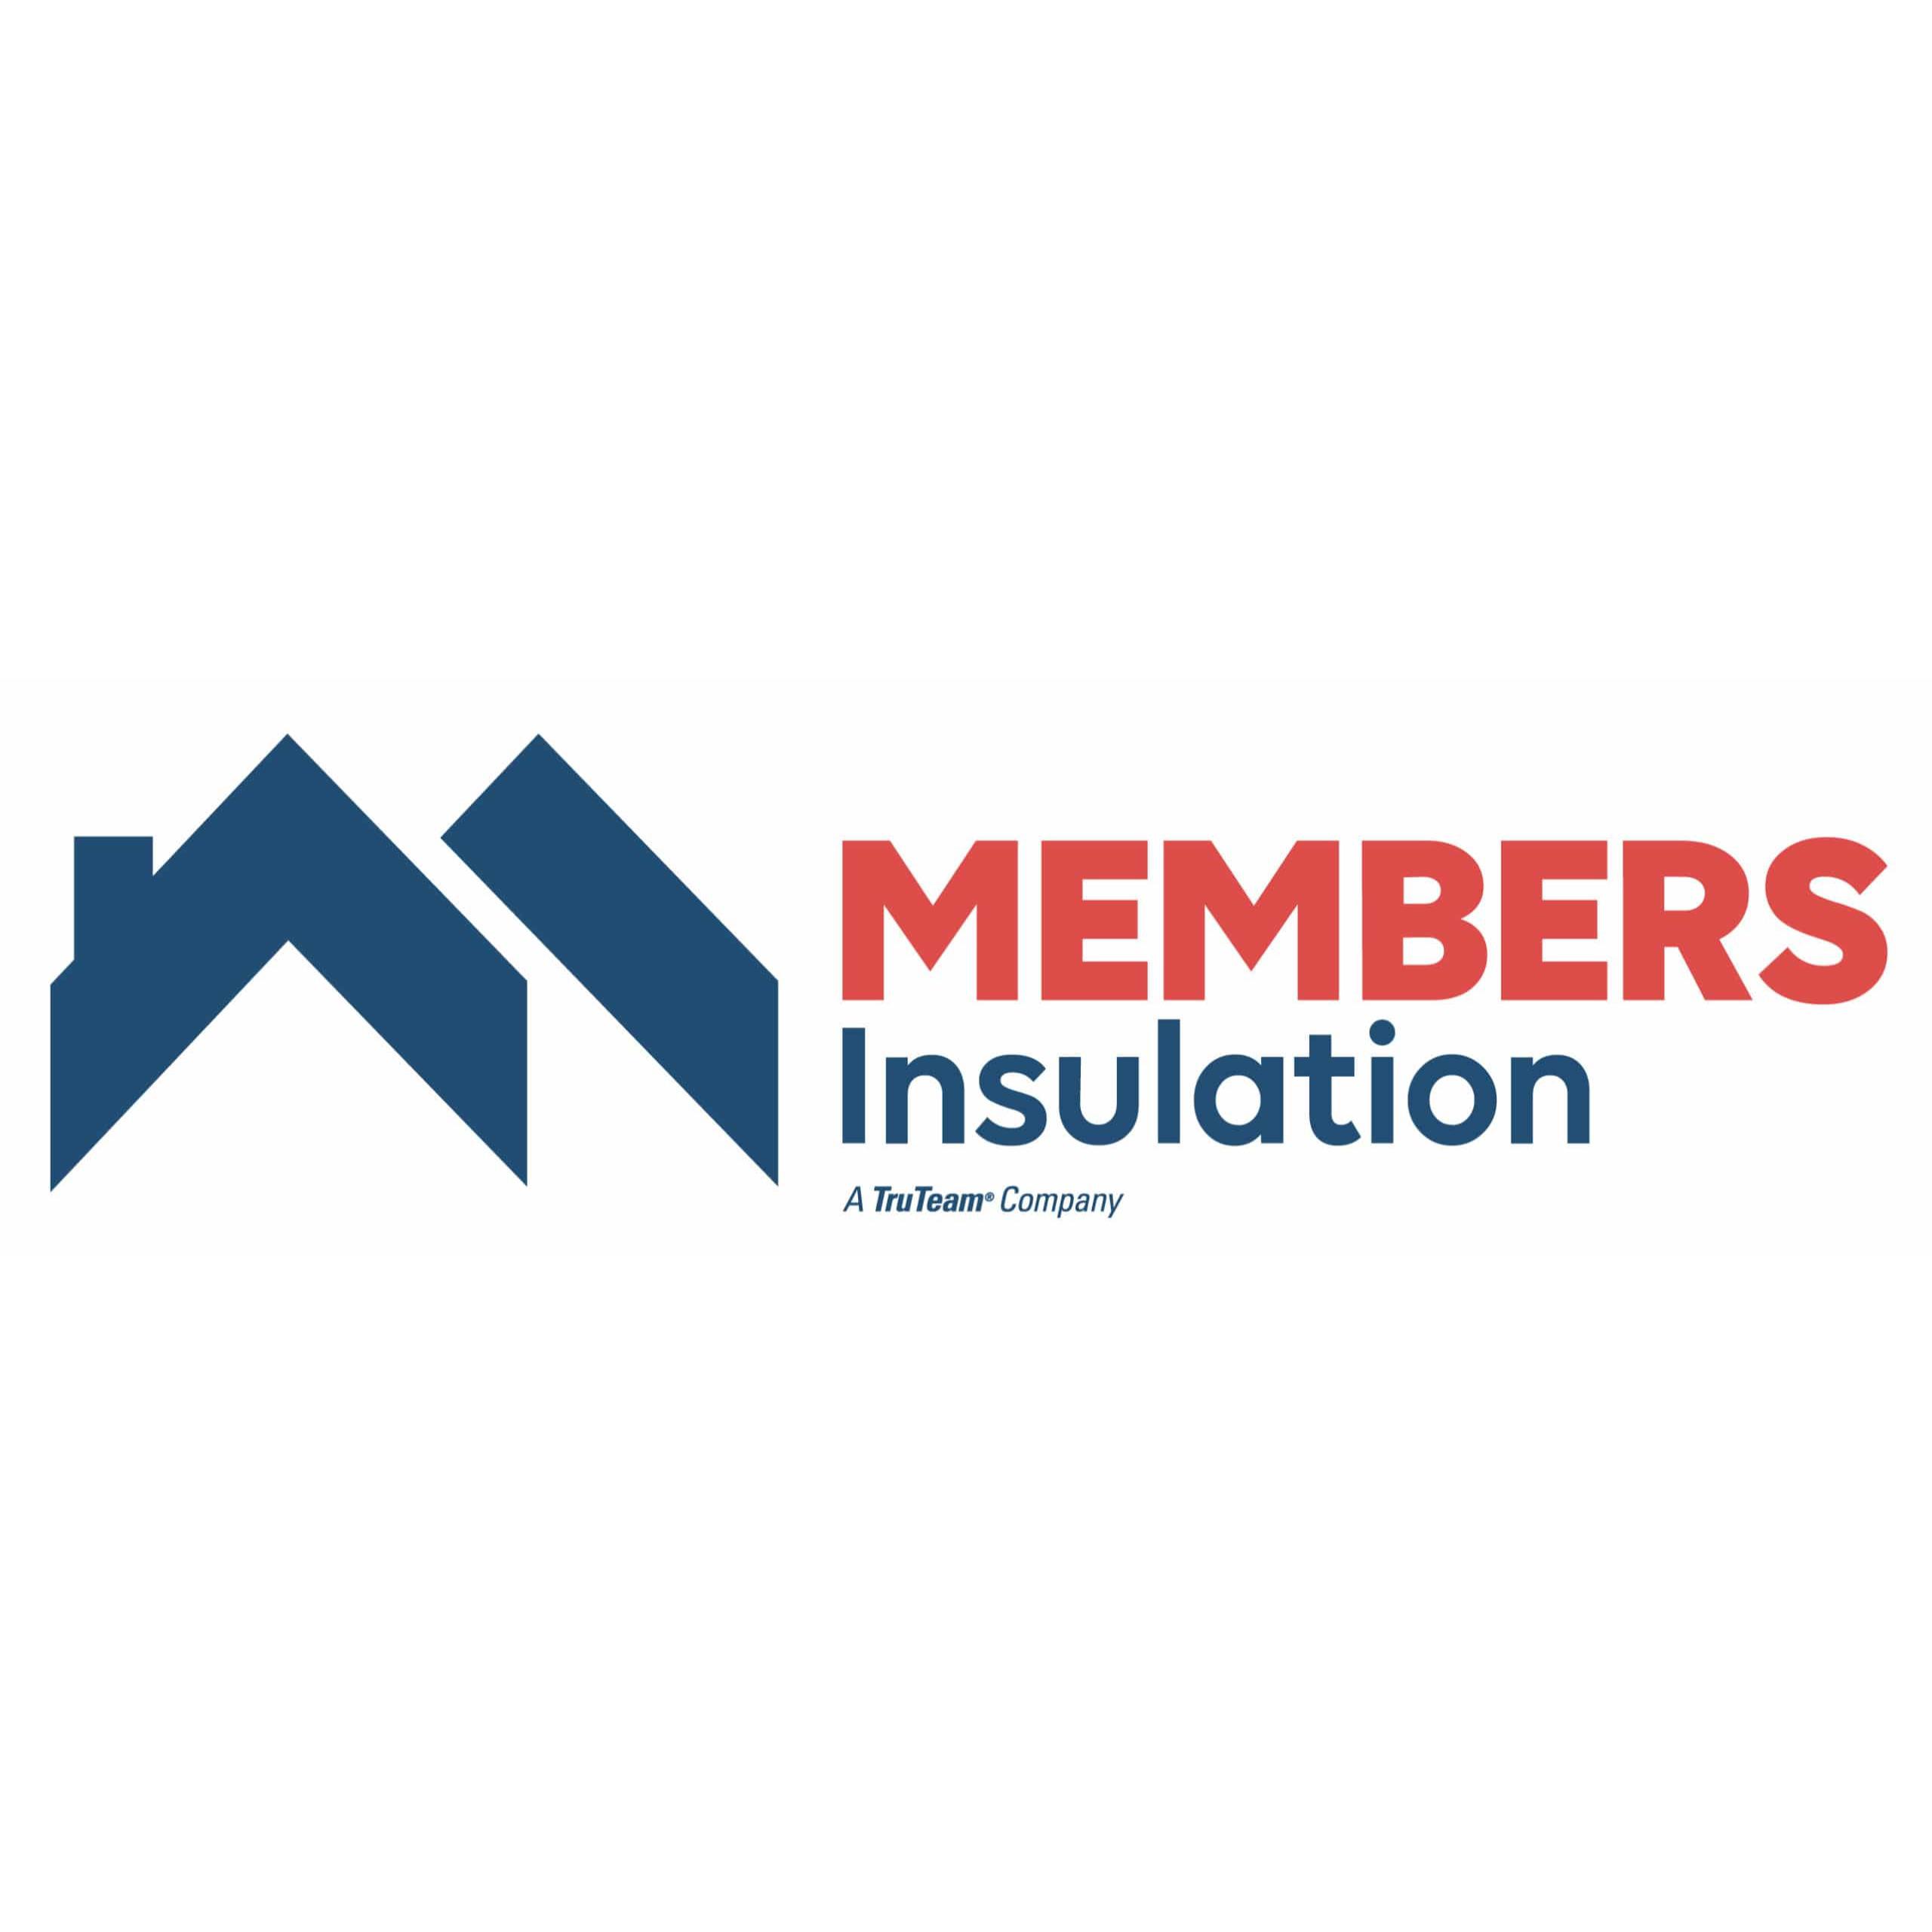 Members insulation